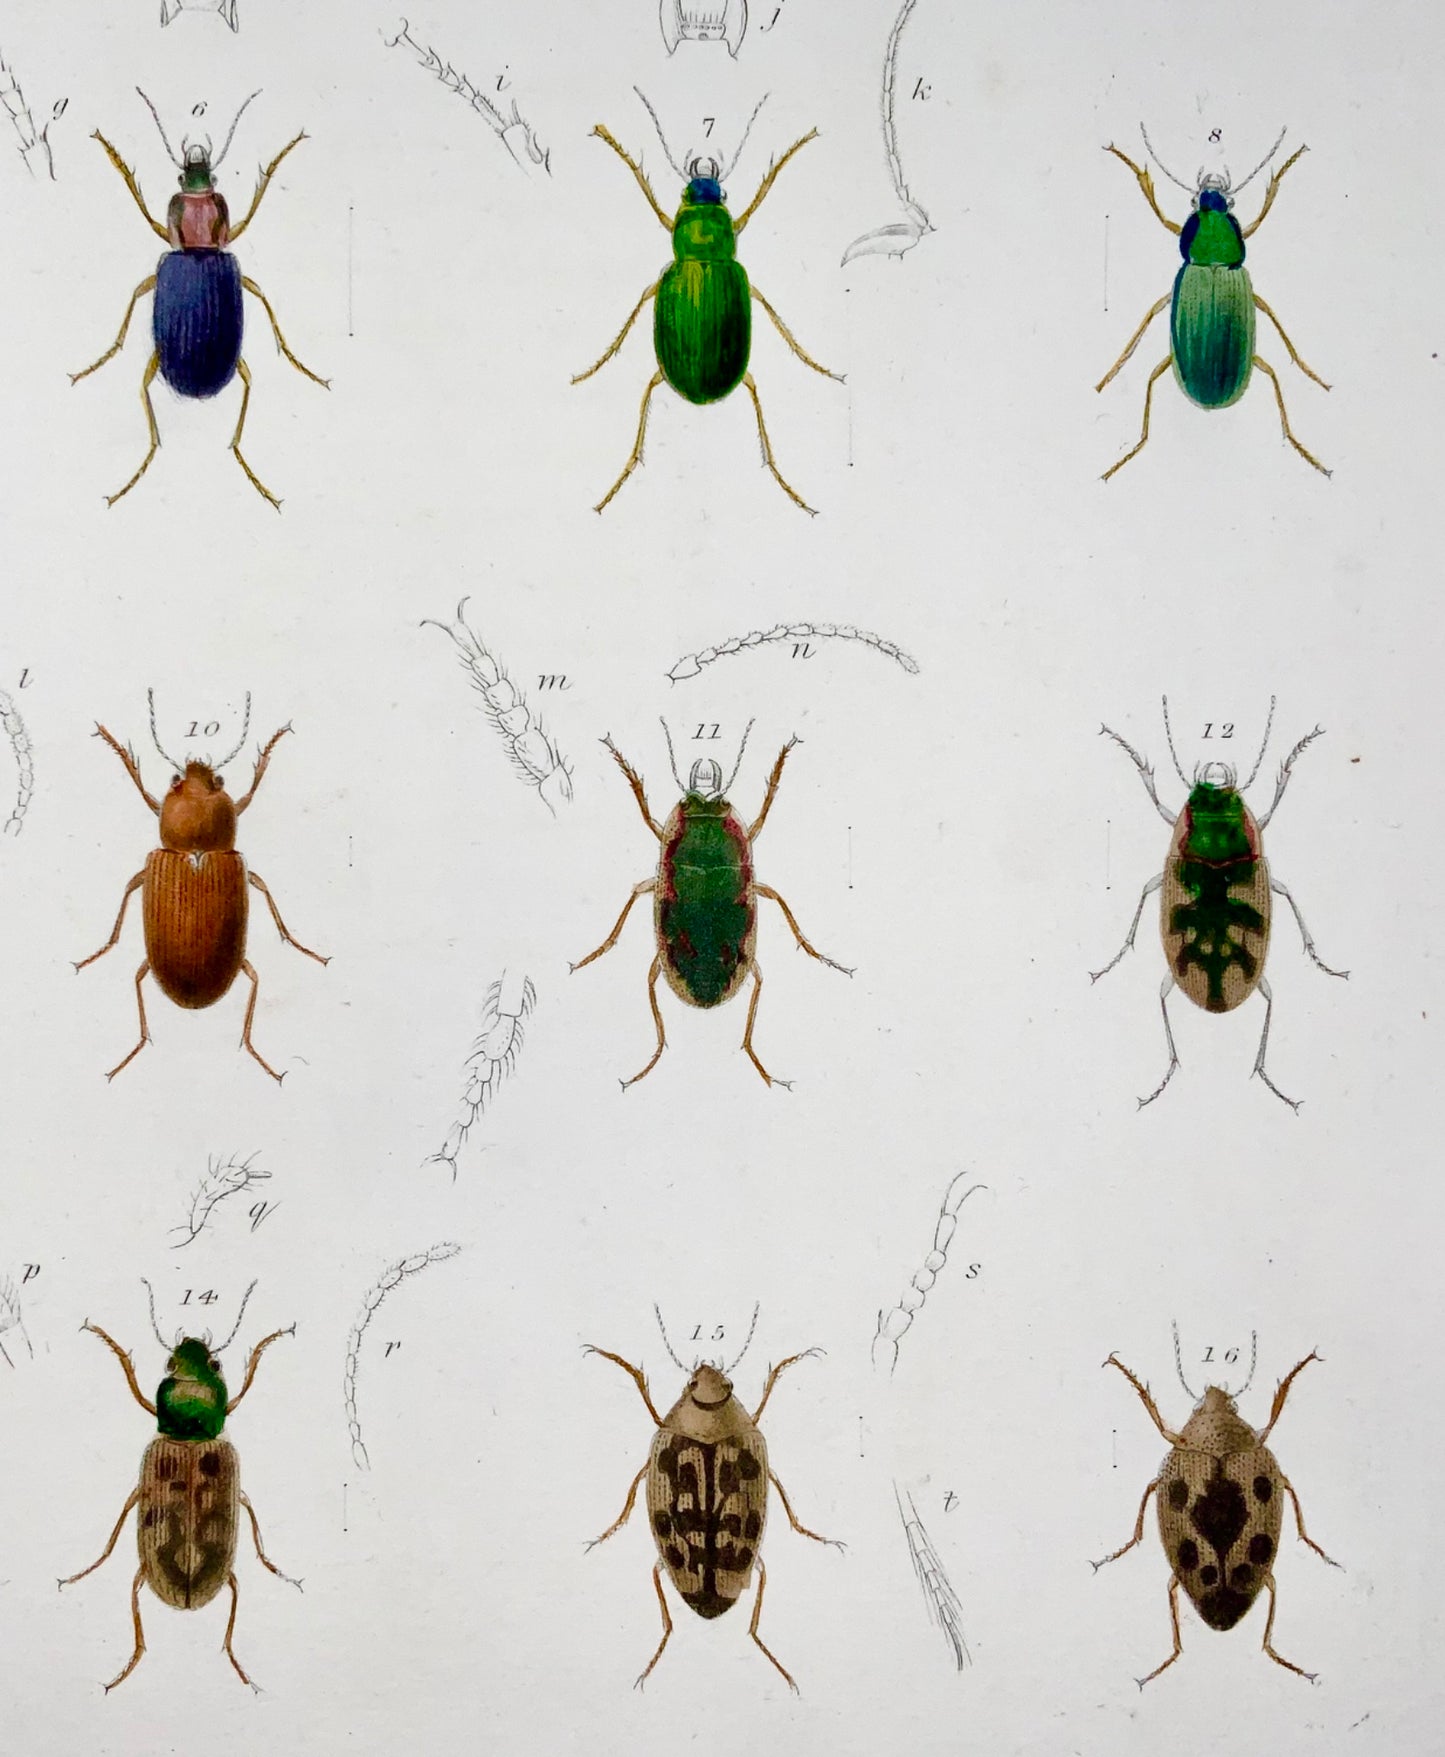 1854 New York Beetles, Pease lith; Emmons, grande litografia in pietra colorata a mano